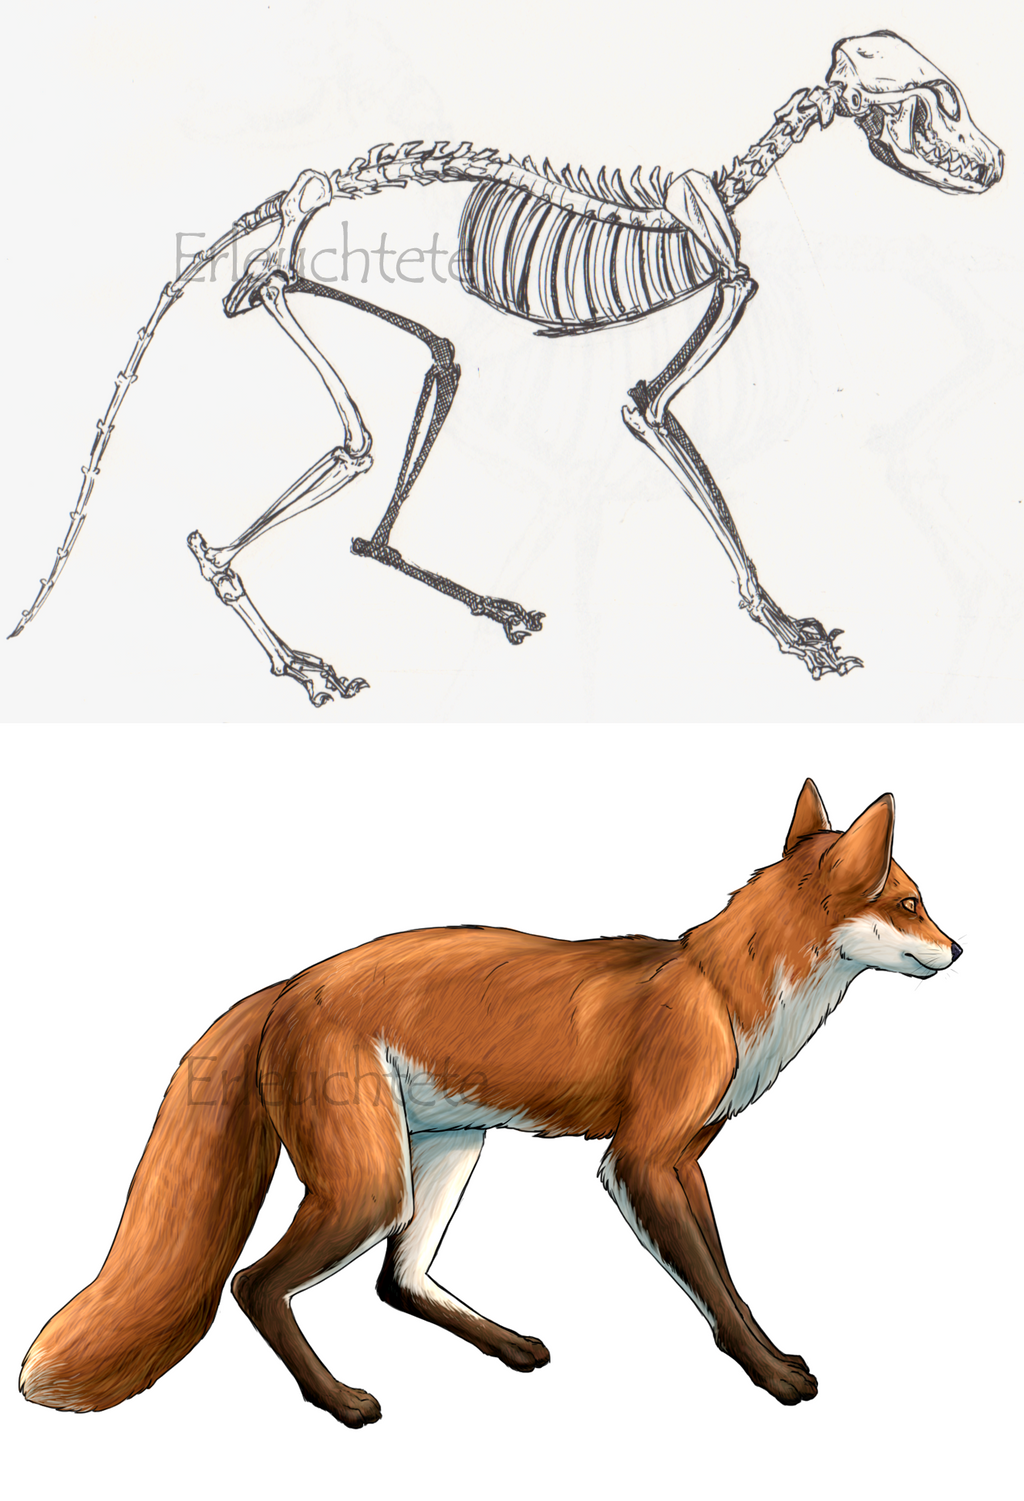 Fox anatomy study by EarlNoir on DeviantArt